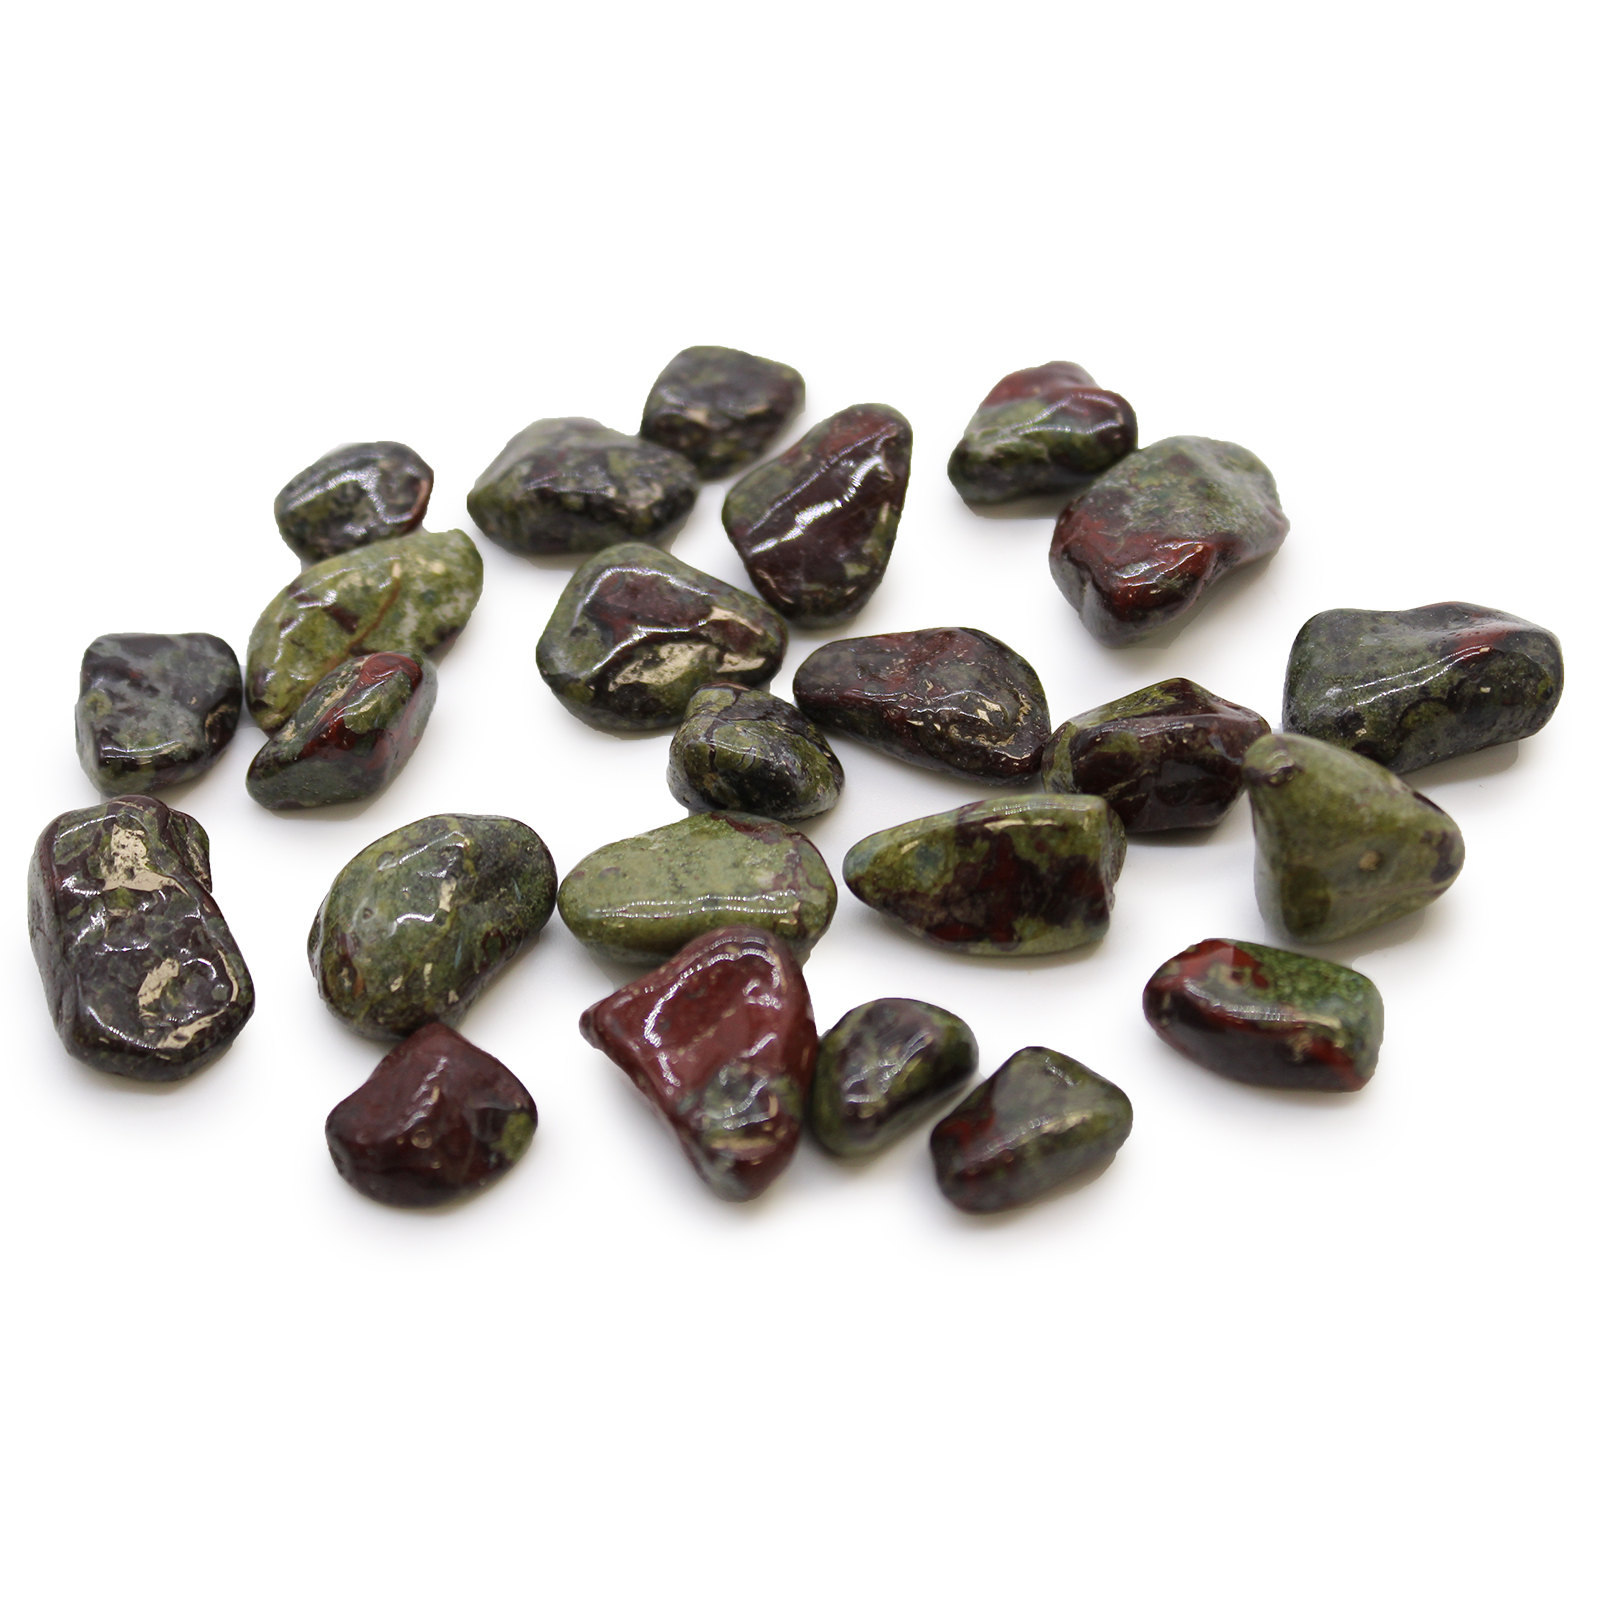 Small African Tumble Stones - Dragon Stones